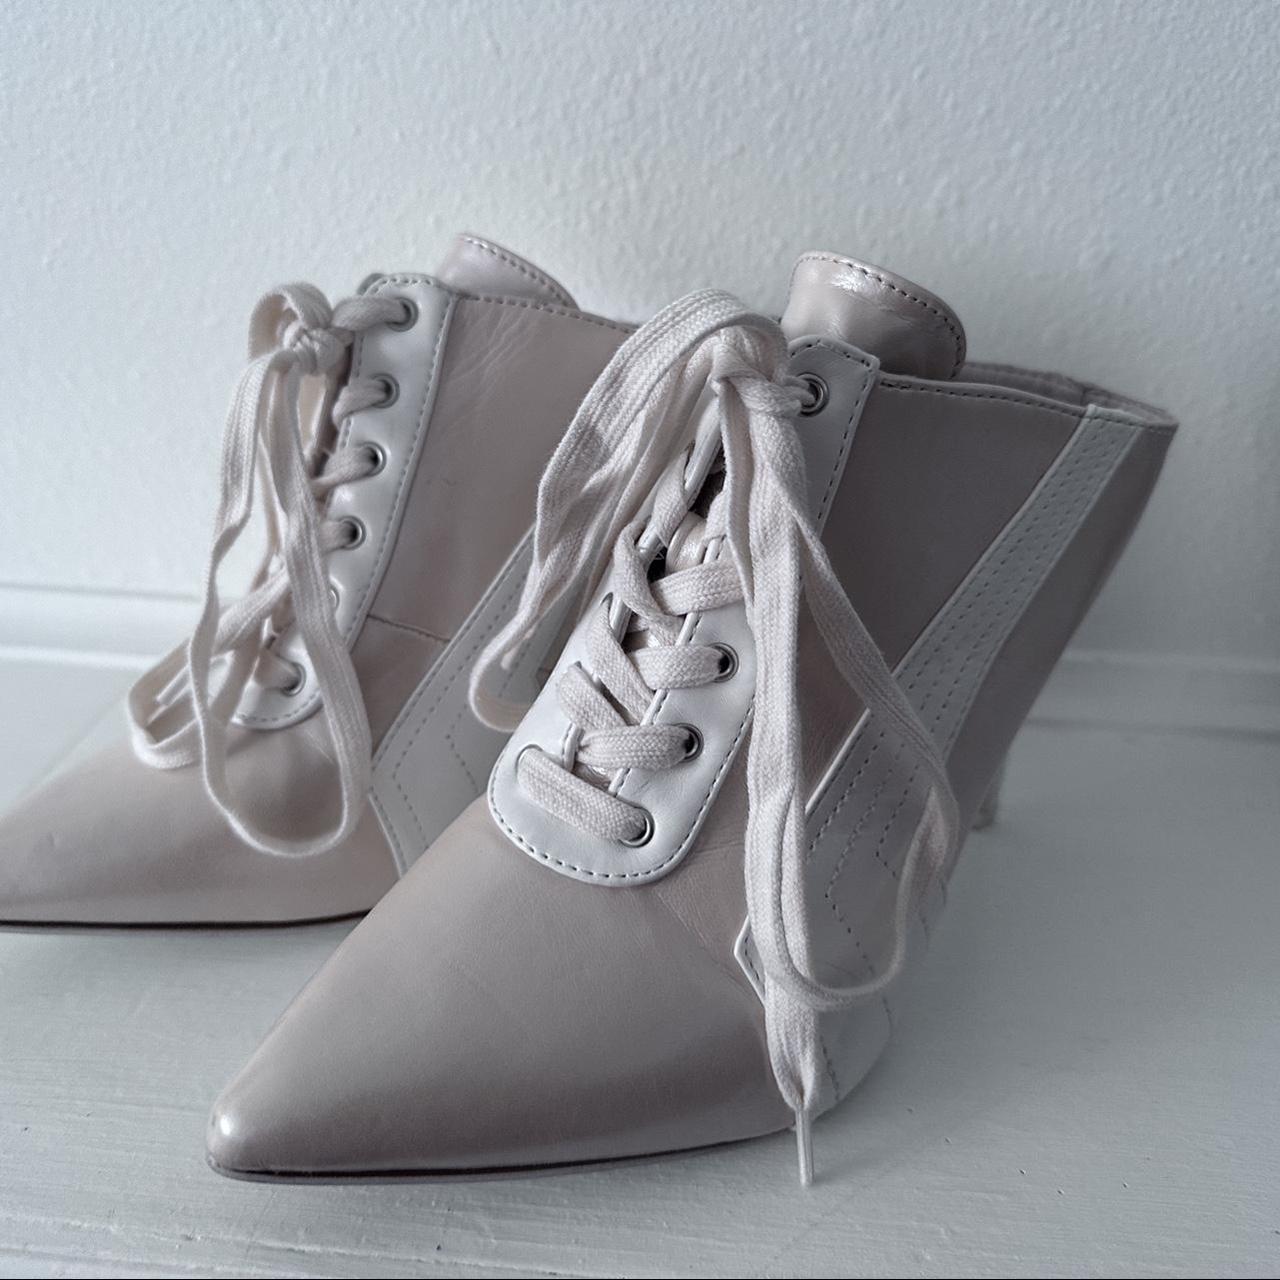 Cape Robbin Women's Cream and White Footwear